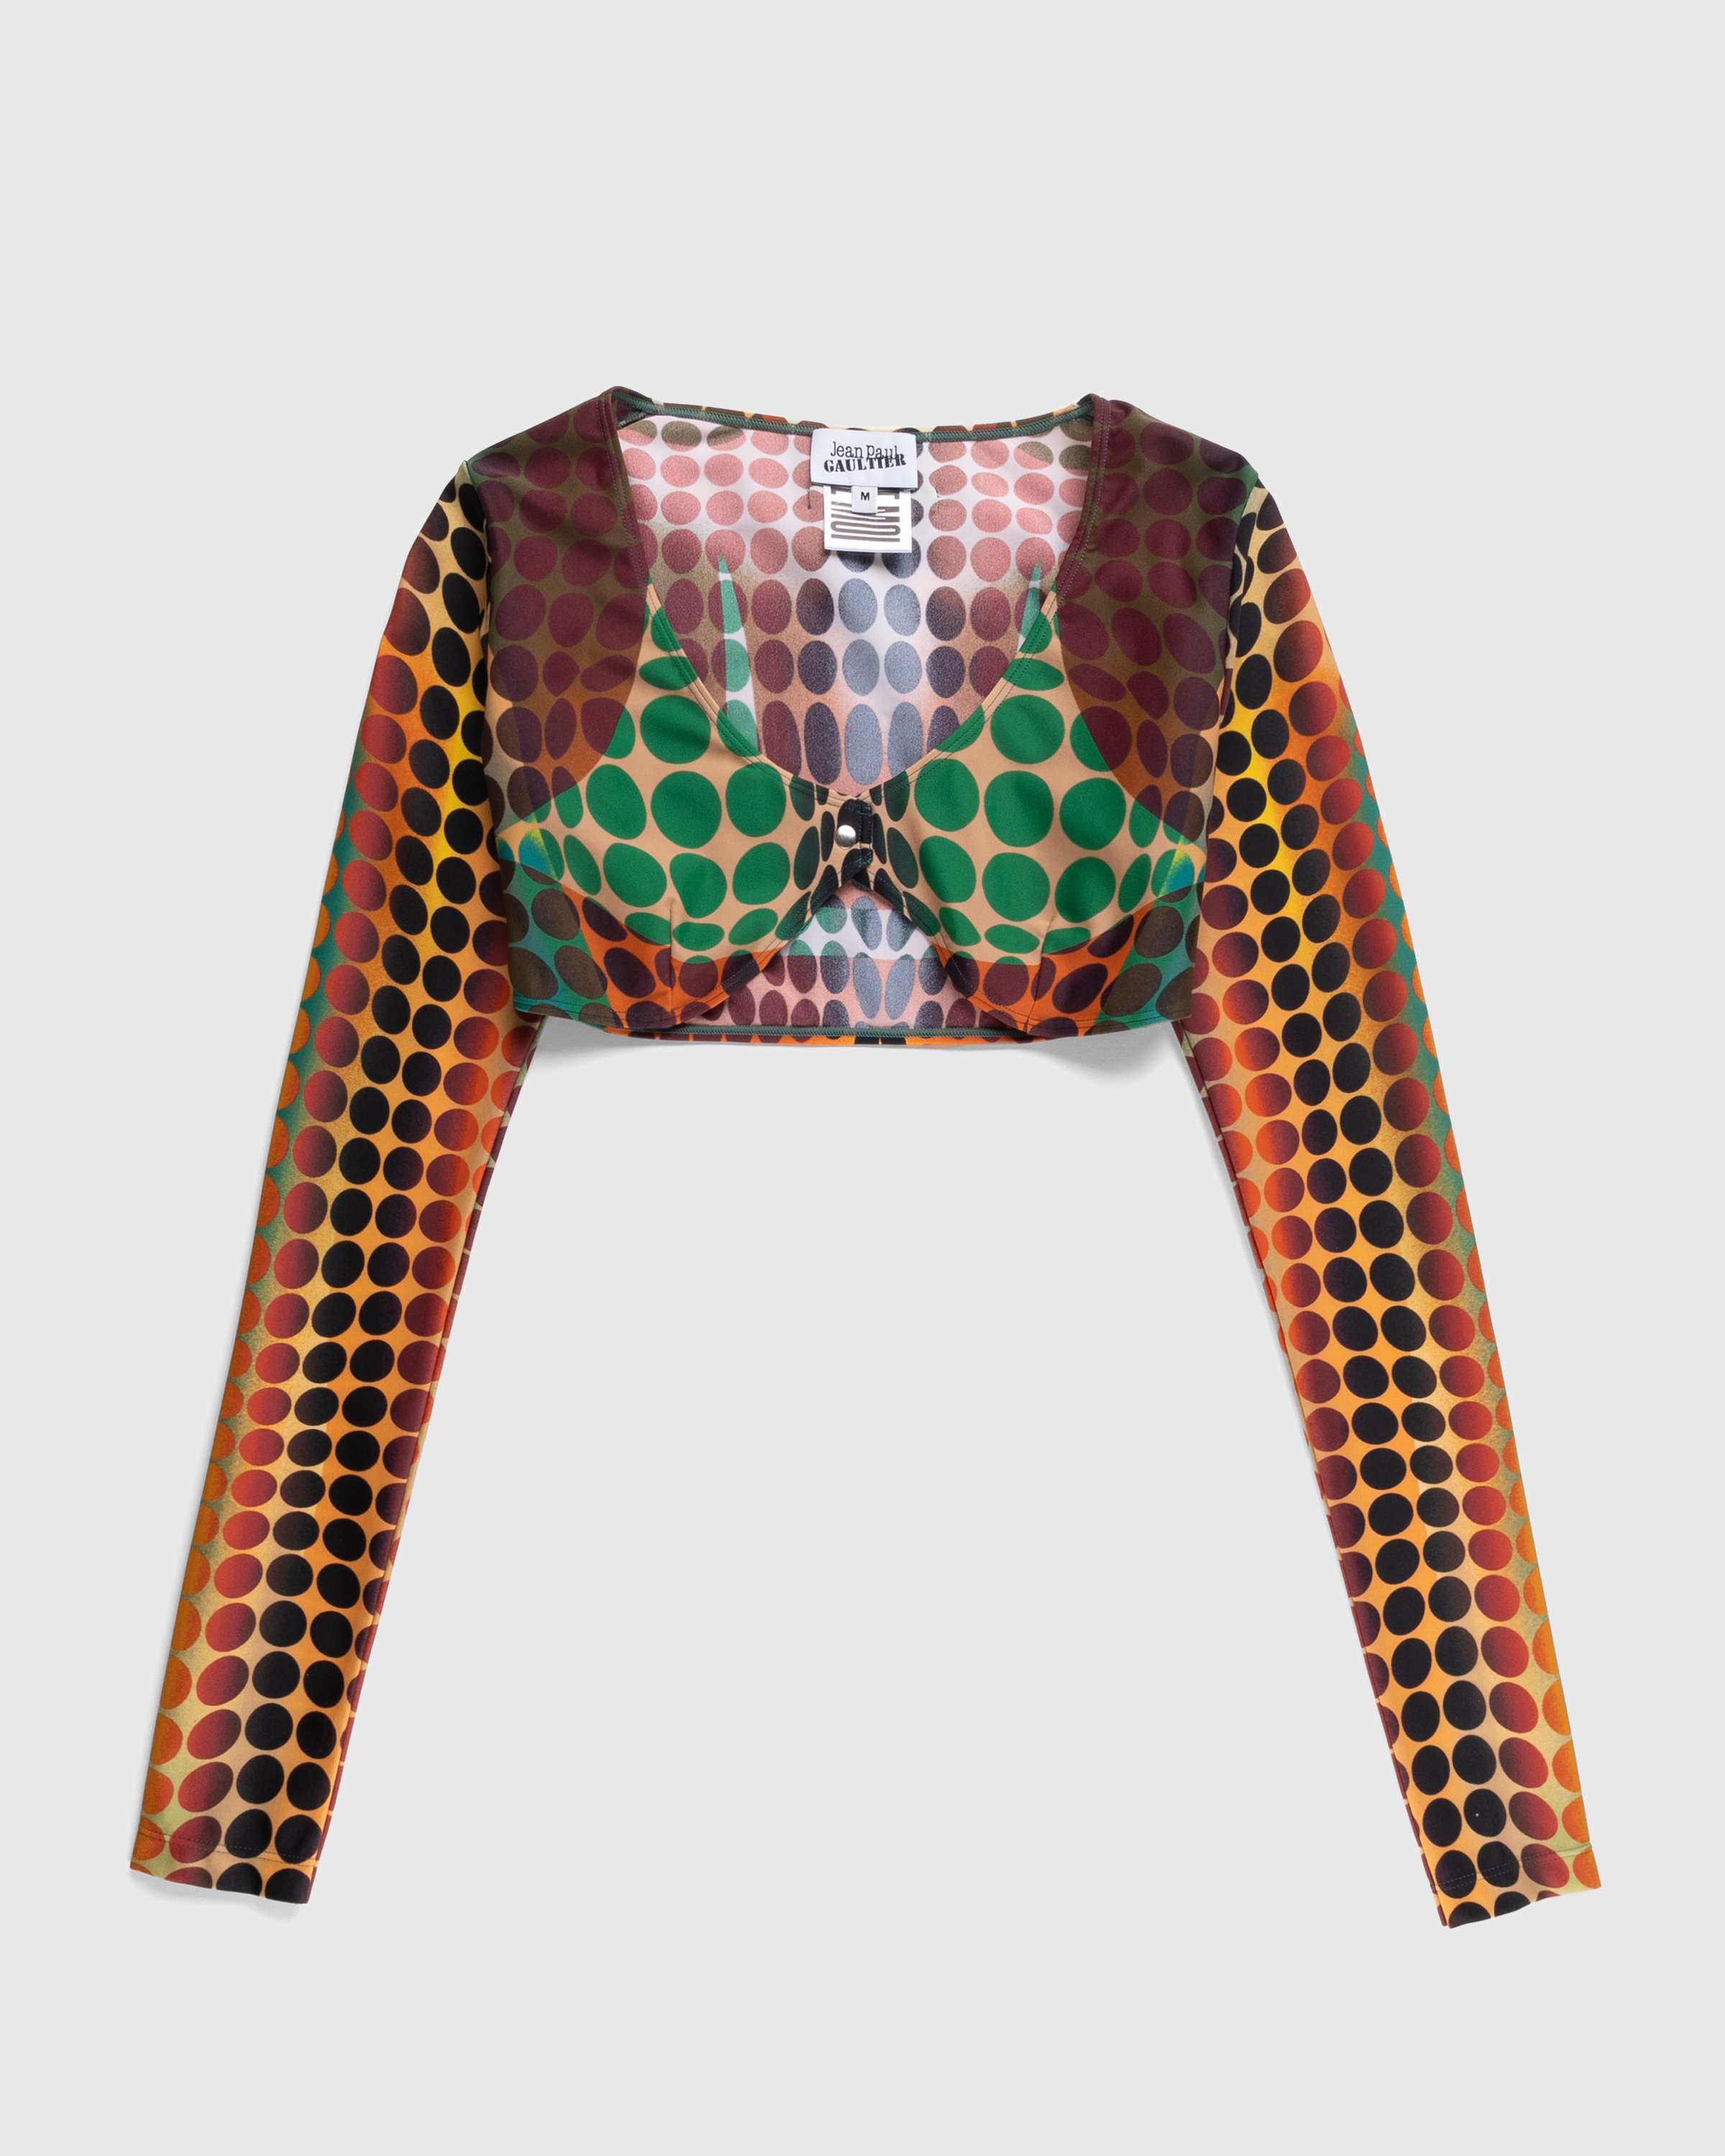 Jean Paul Gaultier - Cropped U Neck Longsleeve Top - Clothing - Orange - Image 1